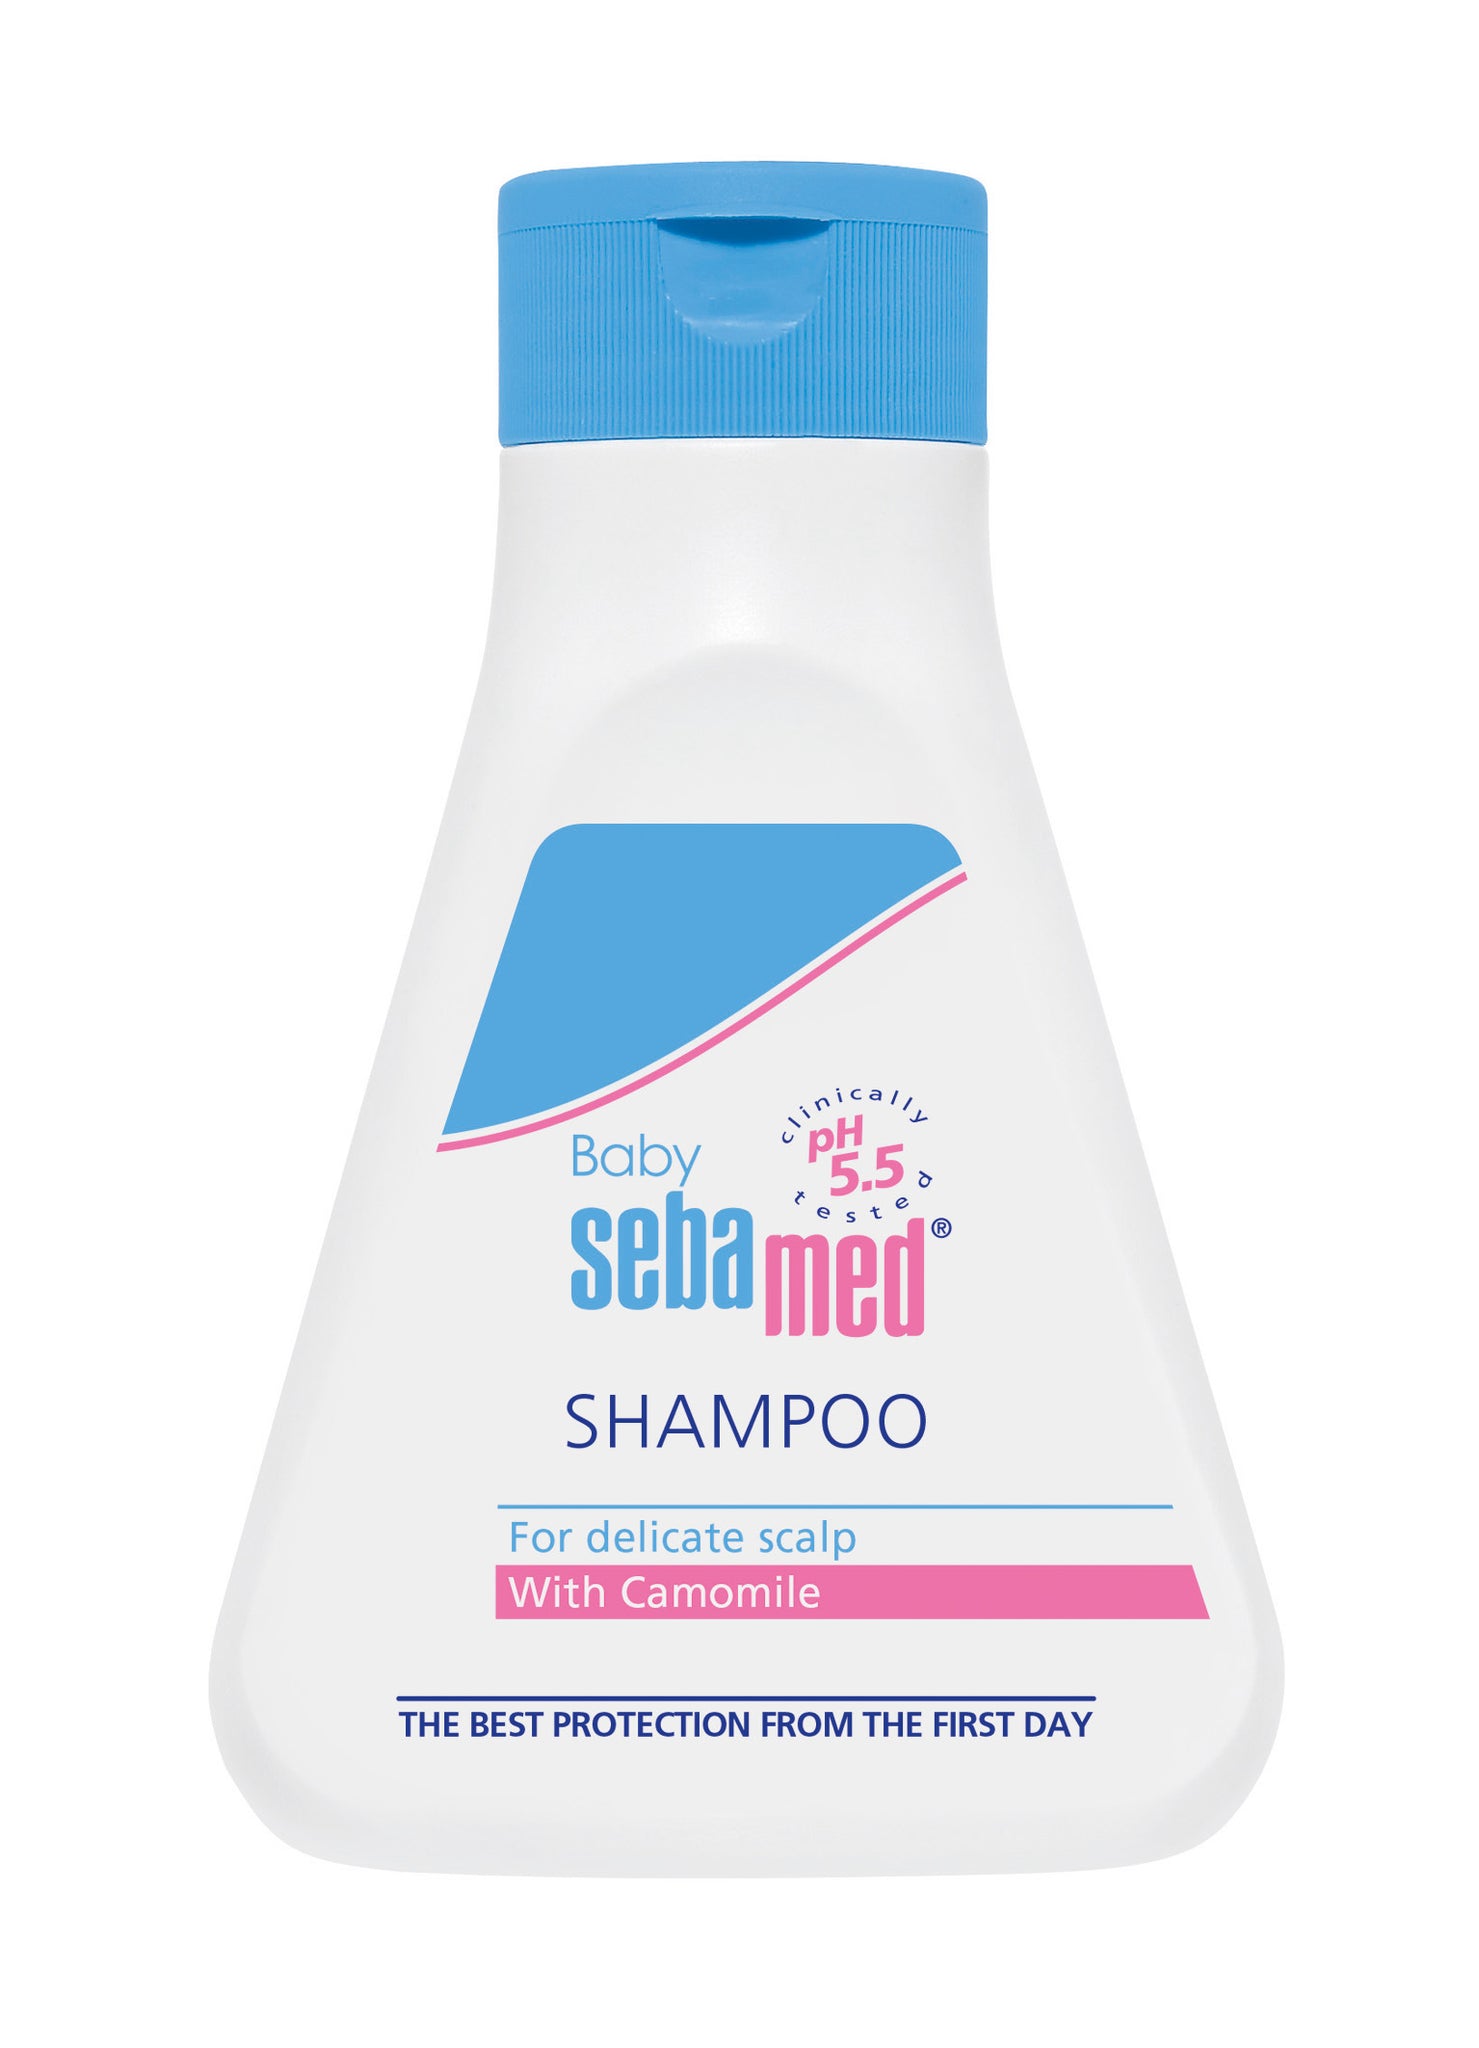 Children's Shampoo 250ml - Sebamed